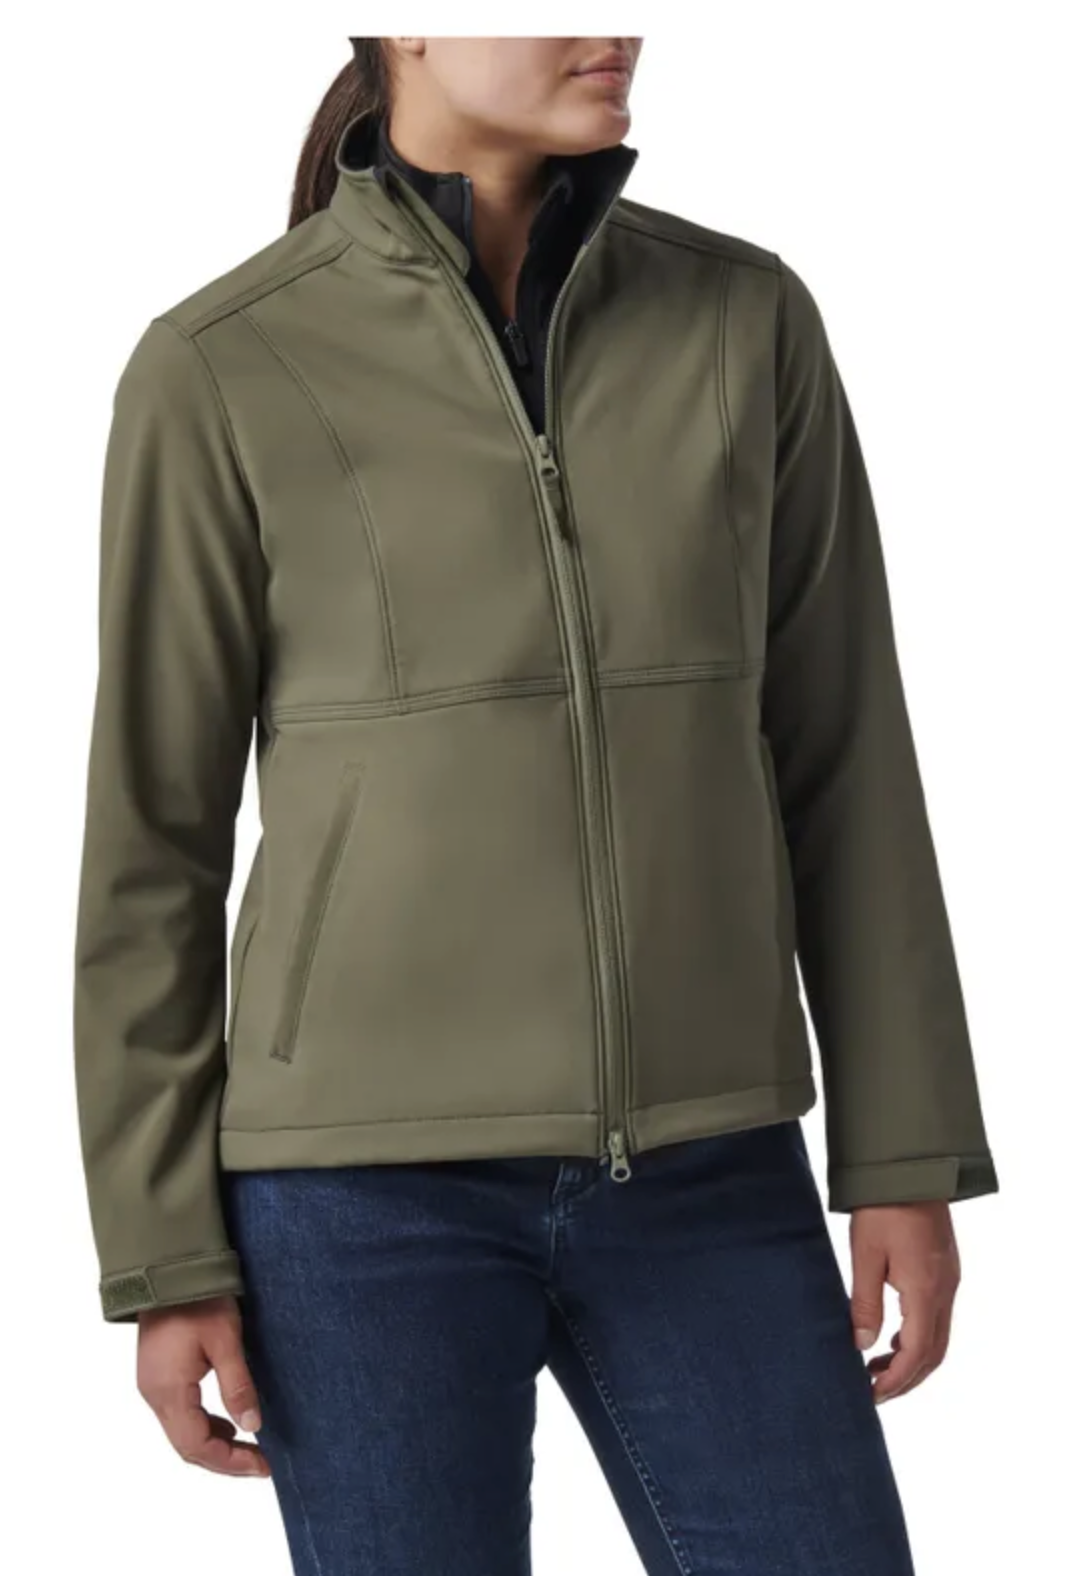 5.11 - Women's Leone Softshell Jacket - Ranger Green (186)